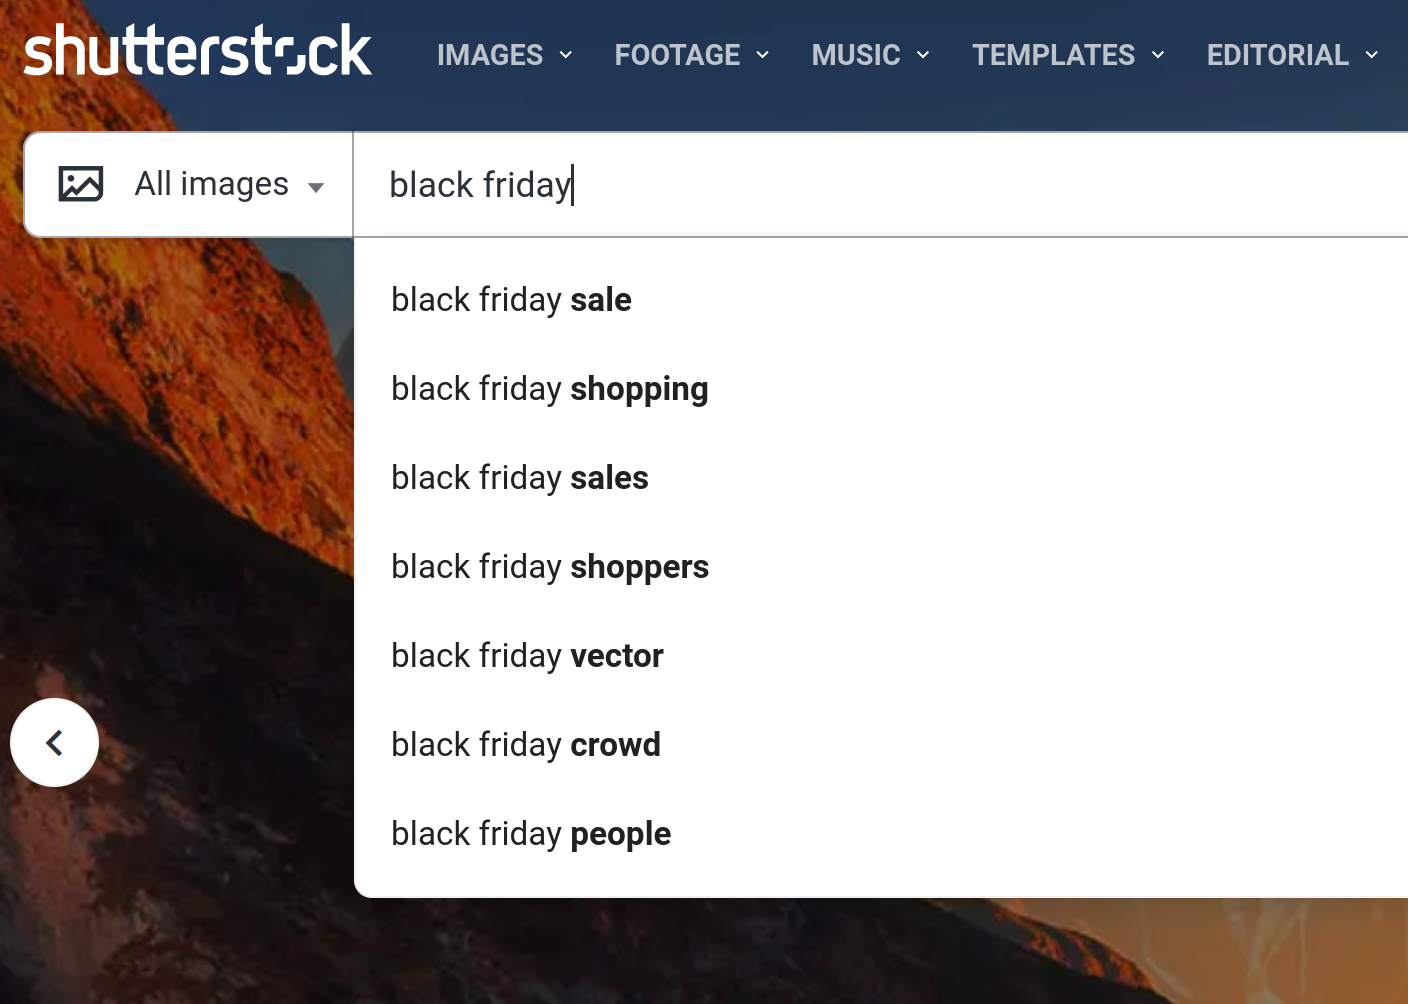 Shutterstock suggestions